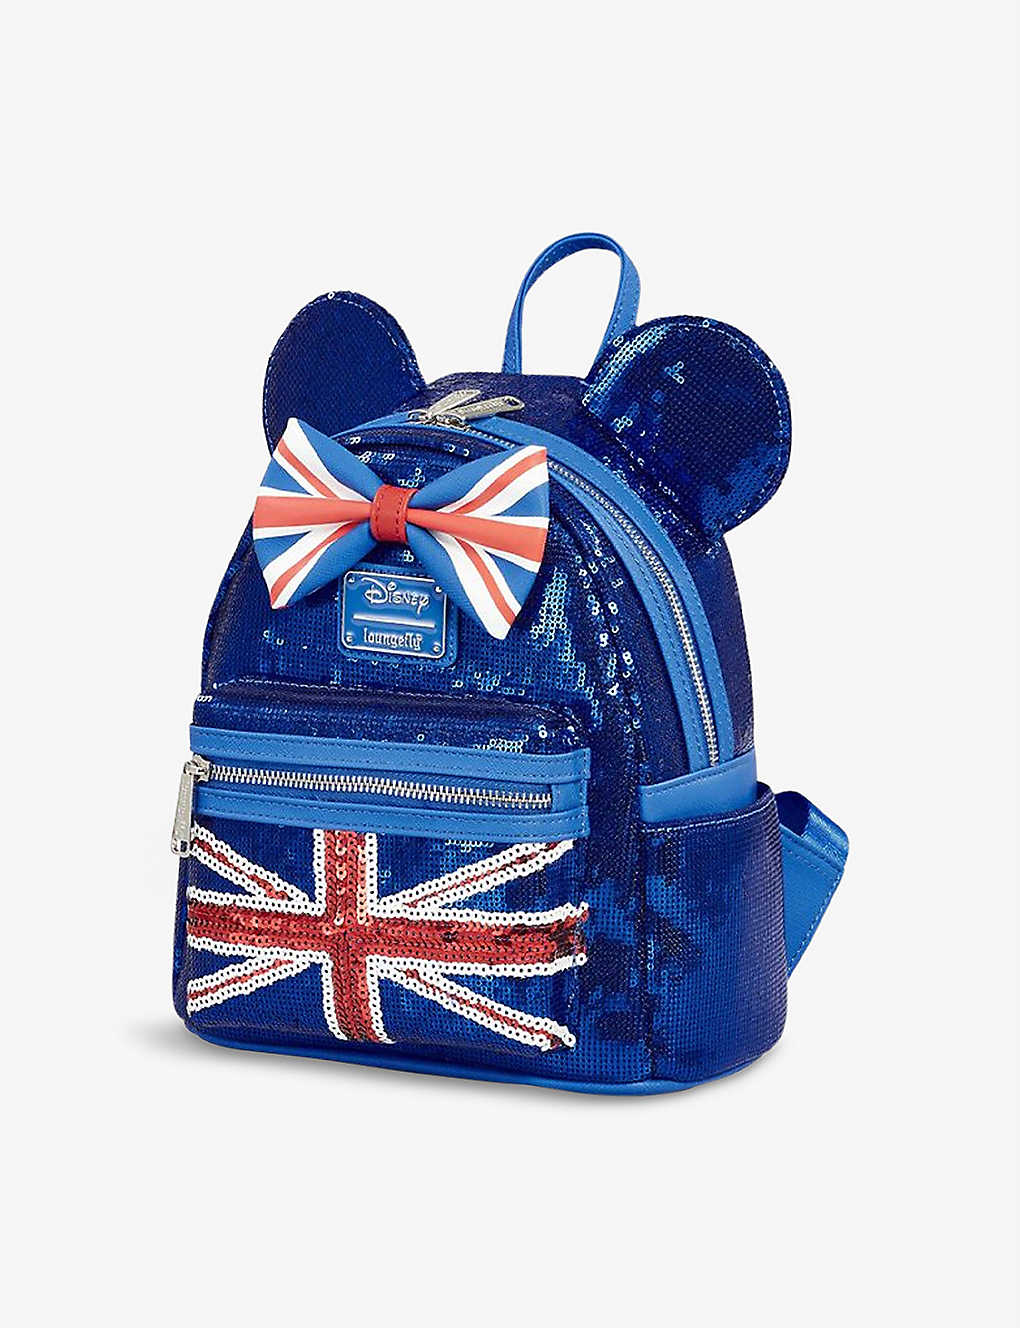 X Disney Minnie Oh My Sweets mini faux-leather backpack Selfridges & Co Girls Accessories Bags Rucksacks 